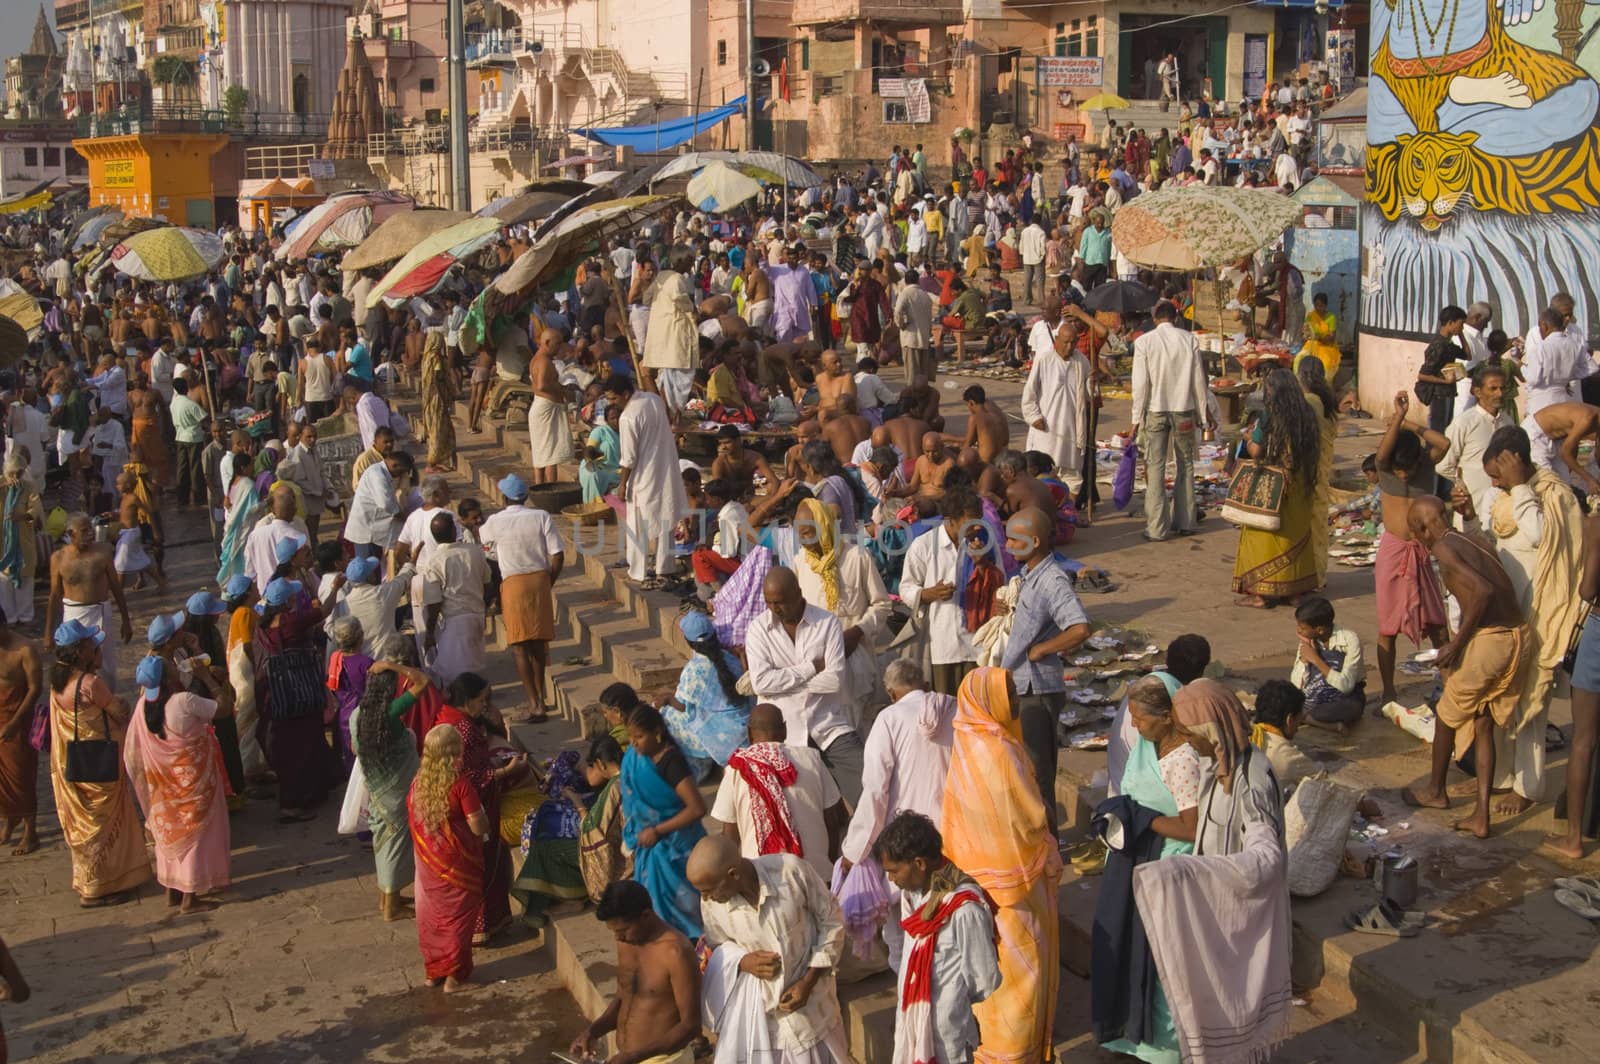 Crowds of people bathing in the River Ganges in the sacred city of Varanasi, Uttar Pradesh, India